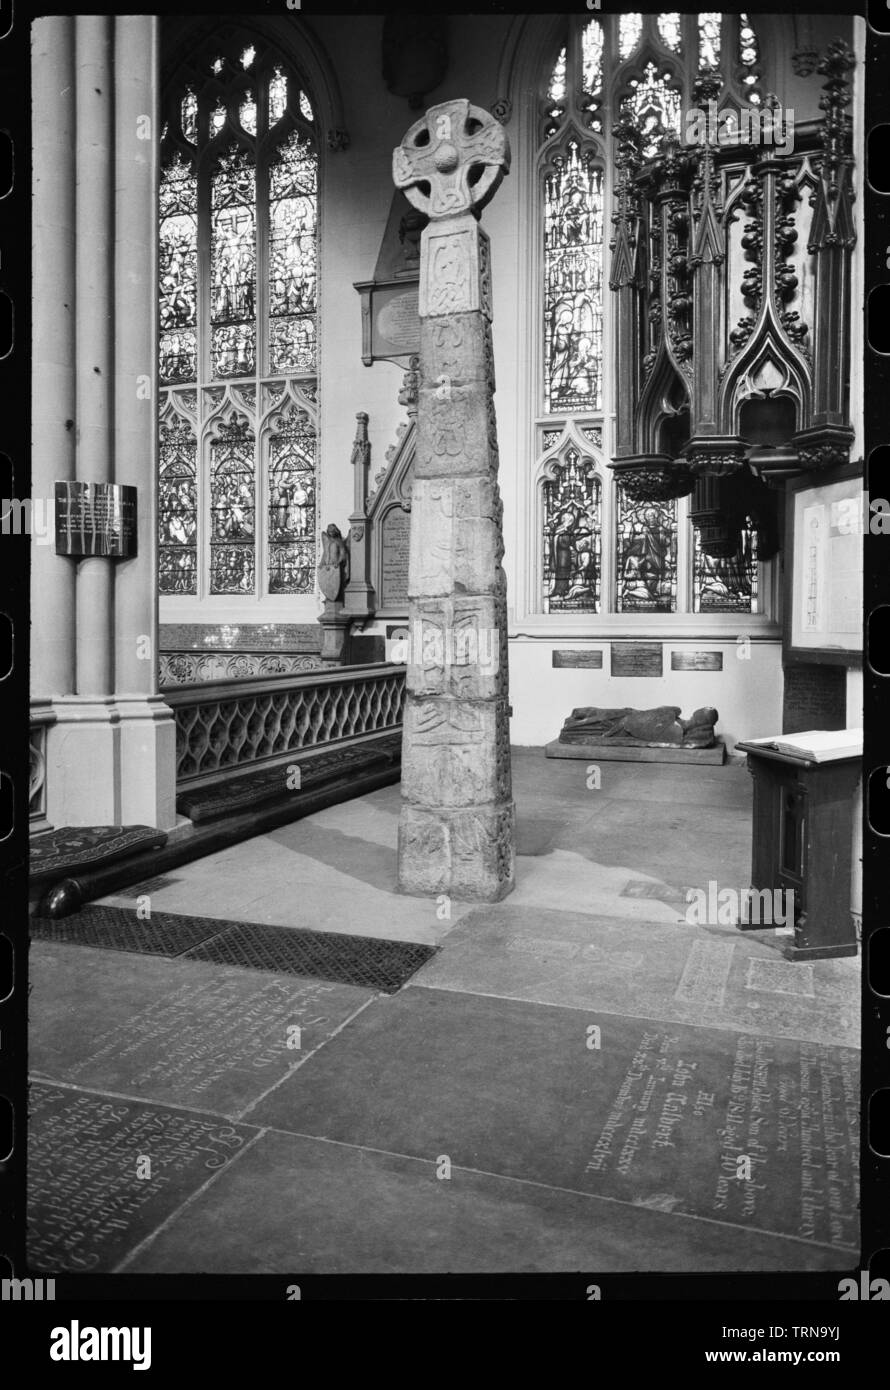 Interieur, St Peter's Church, Kirkgate, Leeds, West Yorkshire, c 1955 - c 1980. Schöpfer: Ursula Clark. Stockfoto